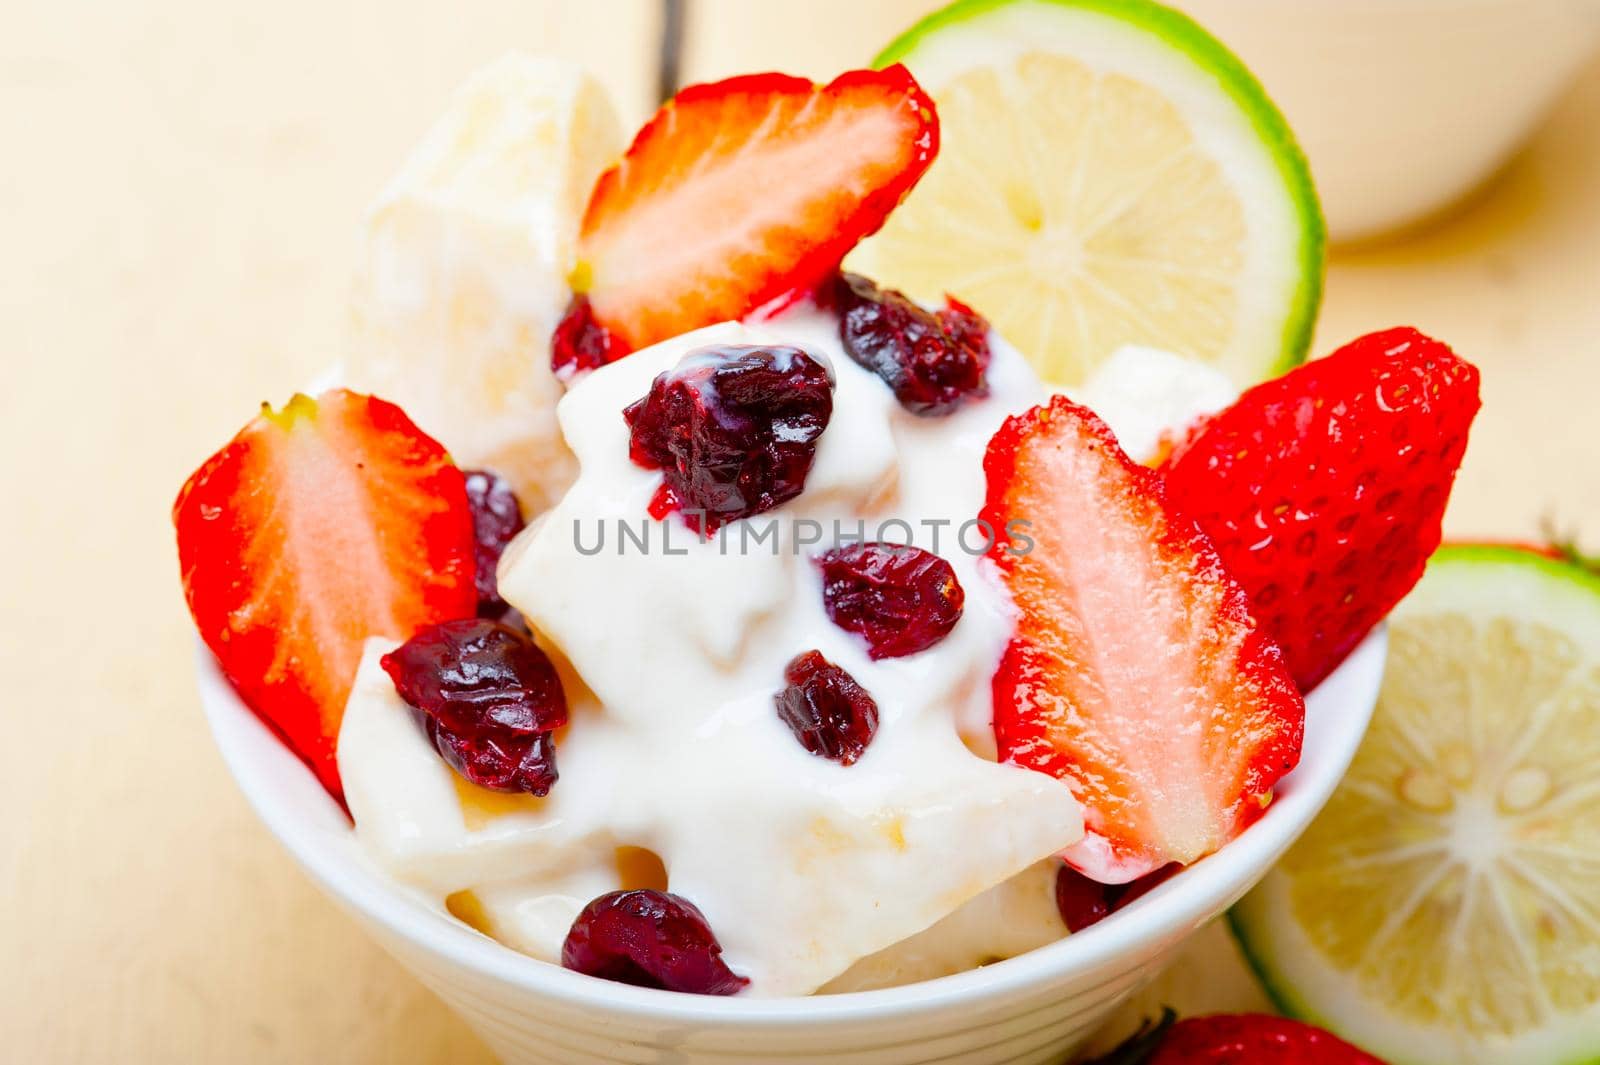 fruit and yogurt salad healthy breakfast by keko64